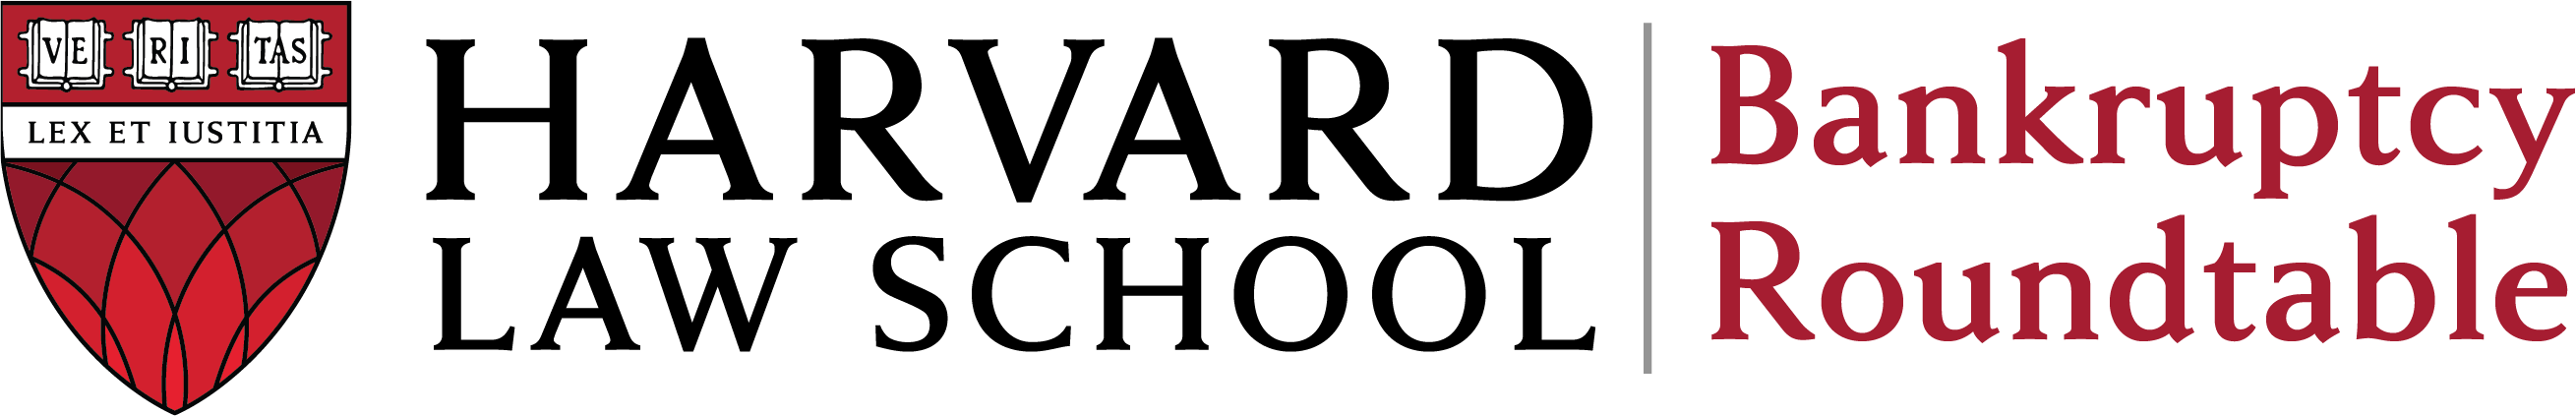 Harvard Law School Bankruptcy Roundtable